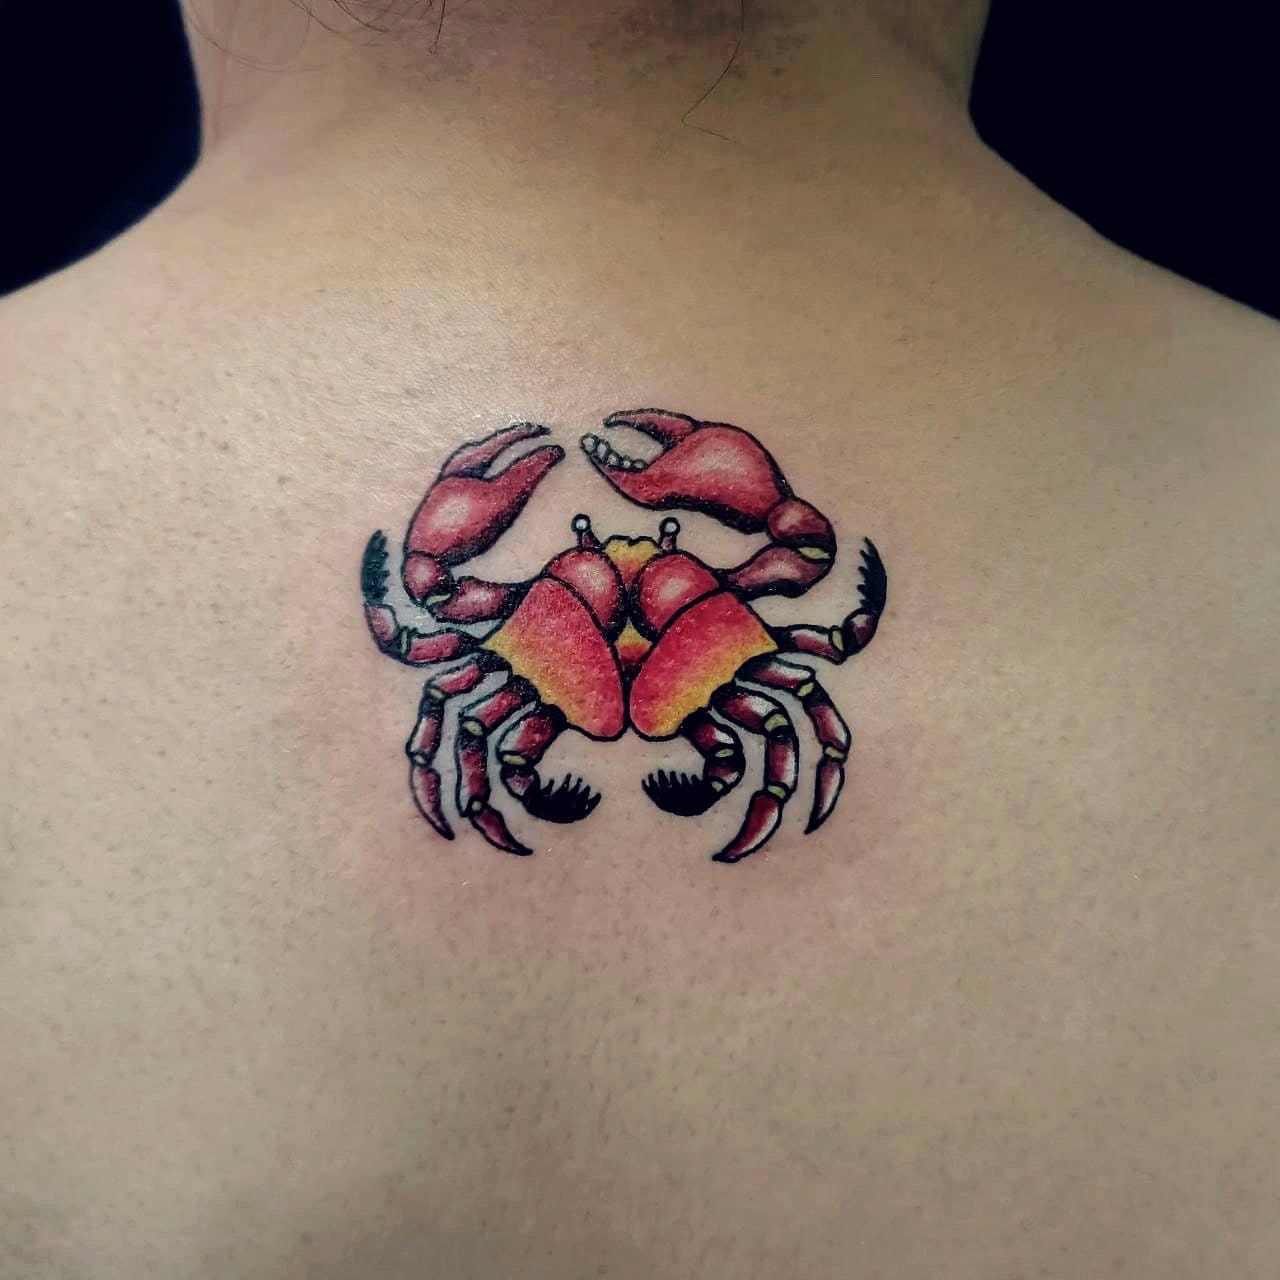 Premium Vector | Collection of crab tattoo designs